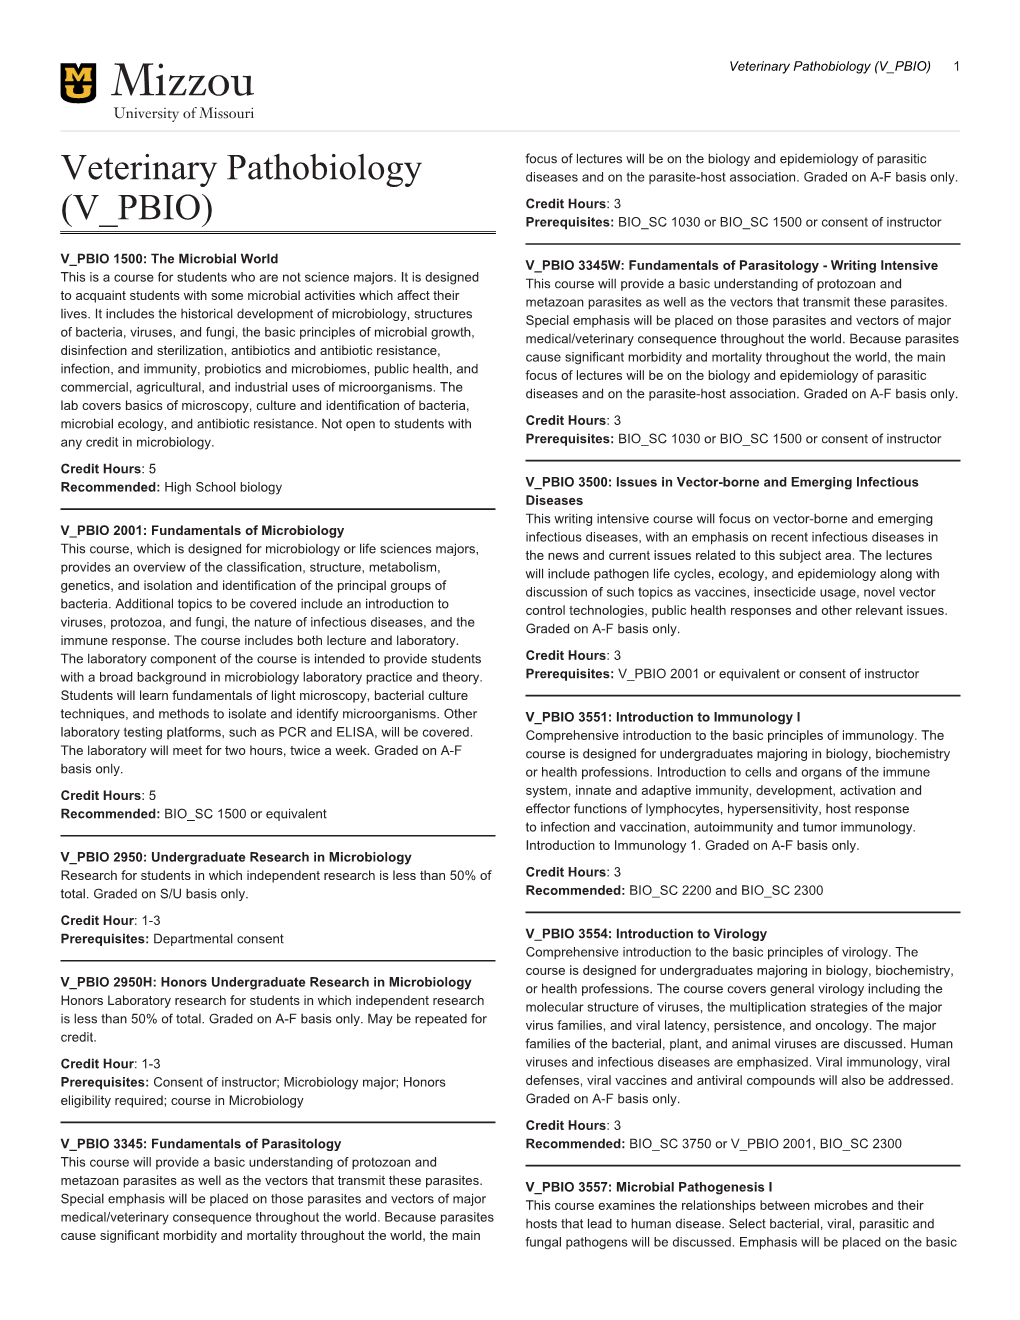 Veterinary Pathobiology (V PBIO) 1